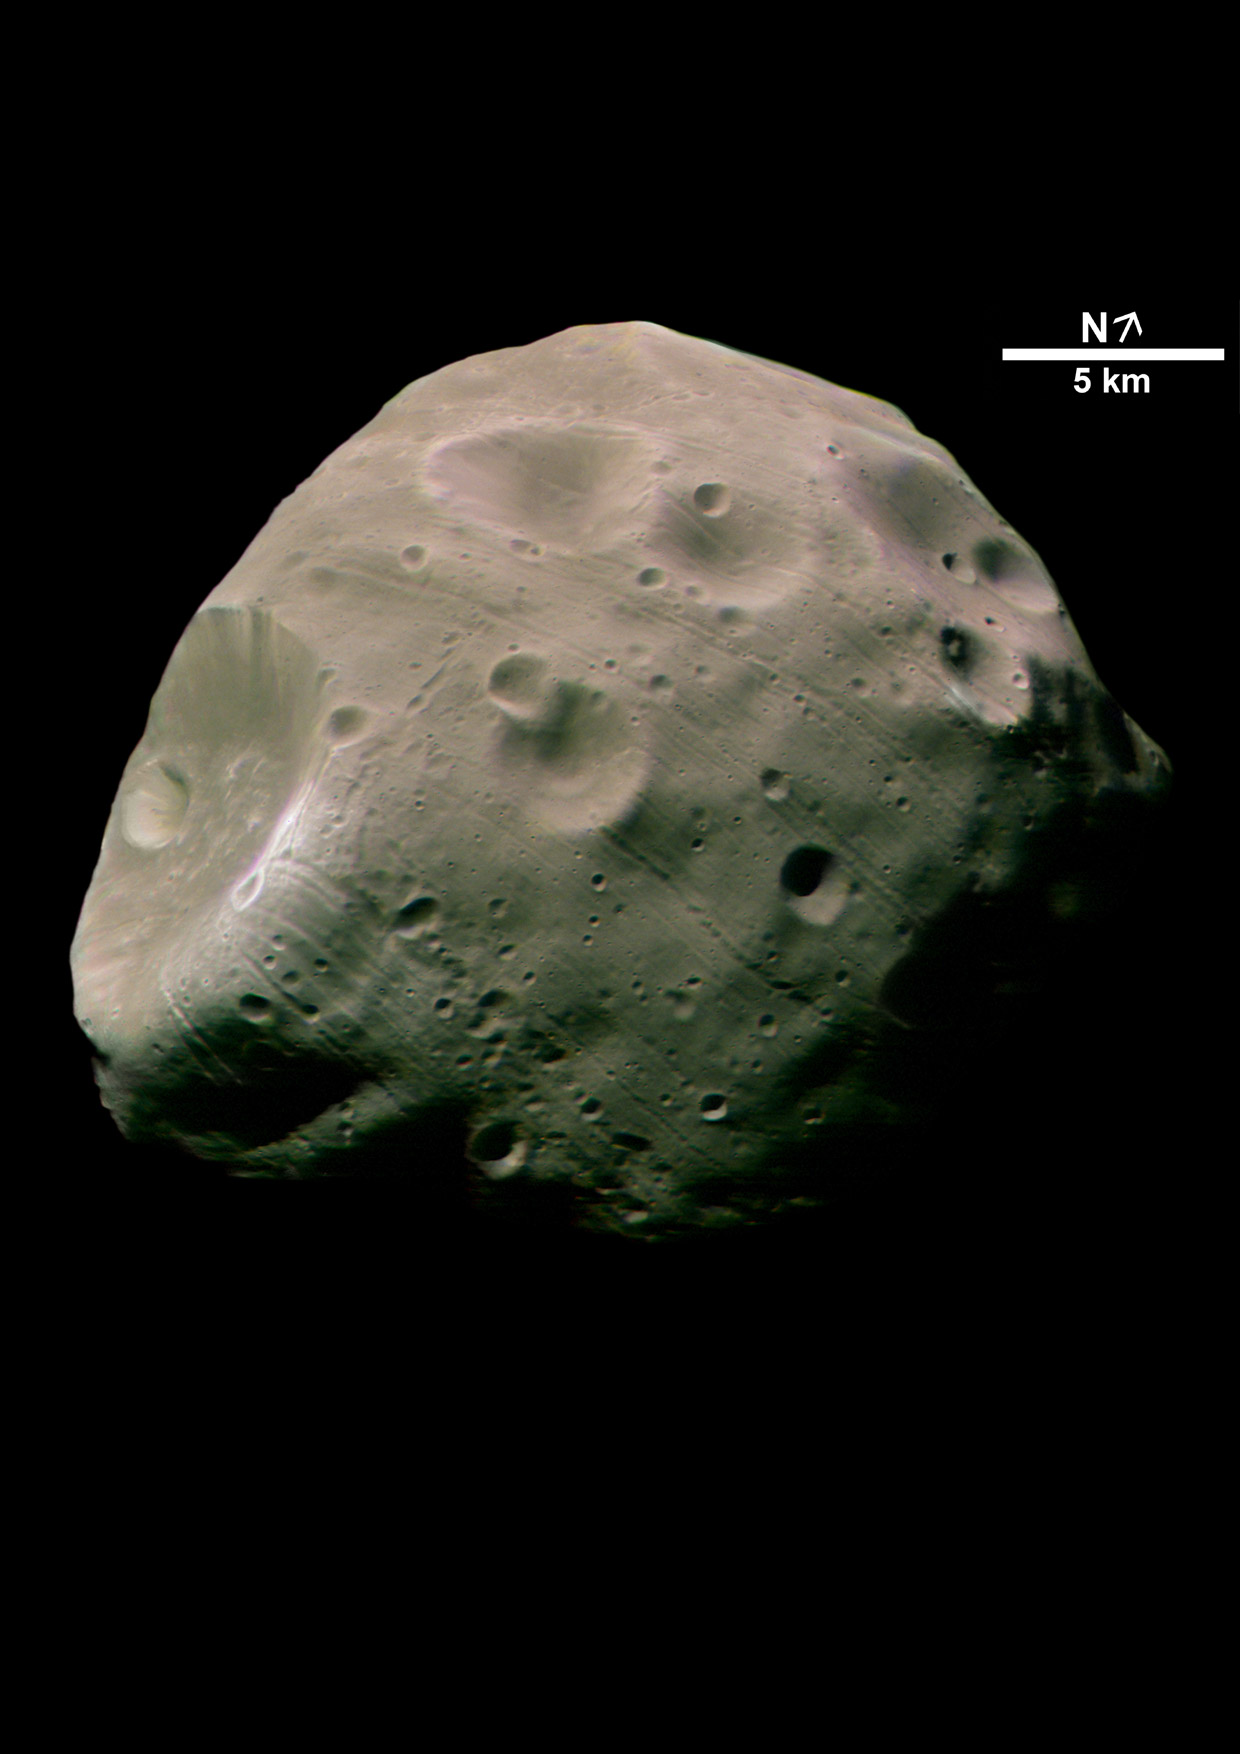 Phobos ESA